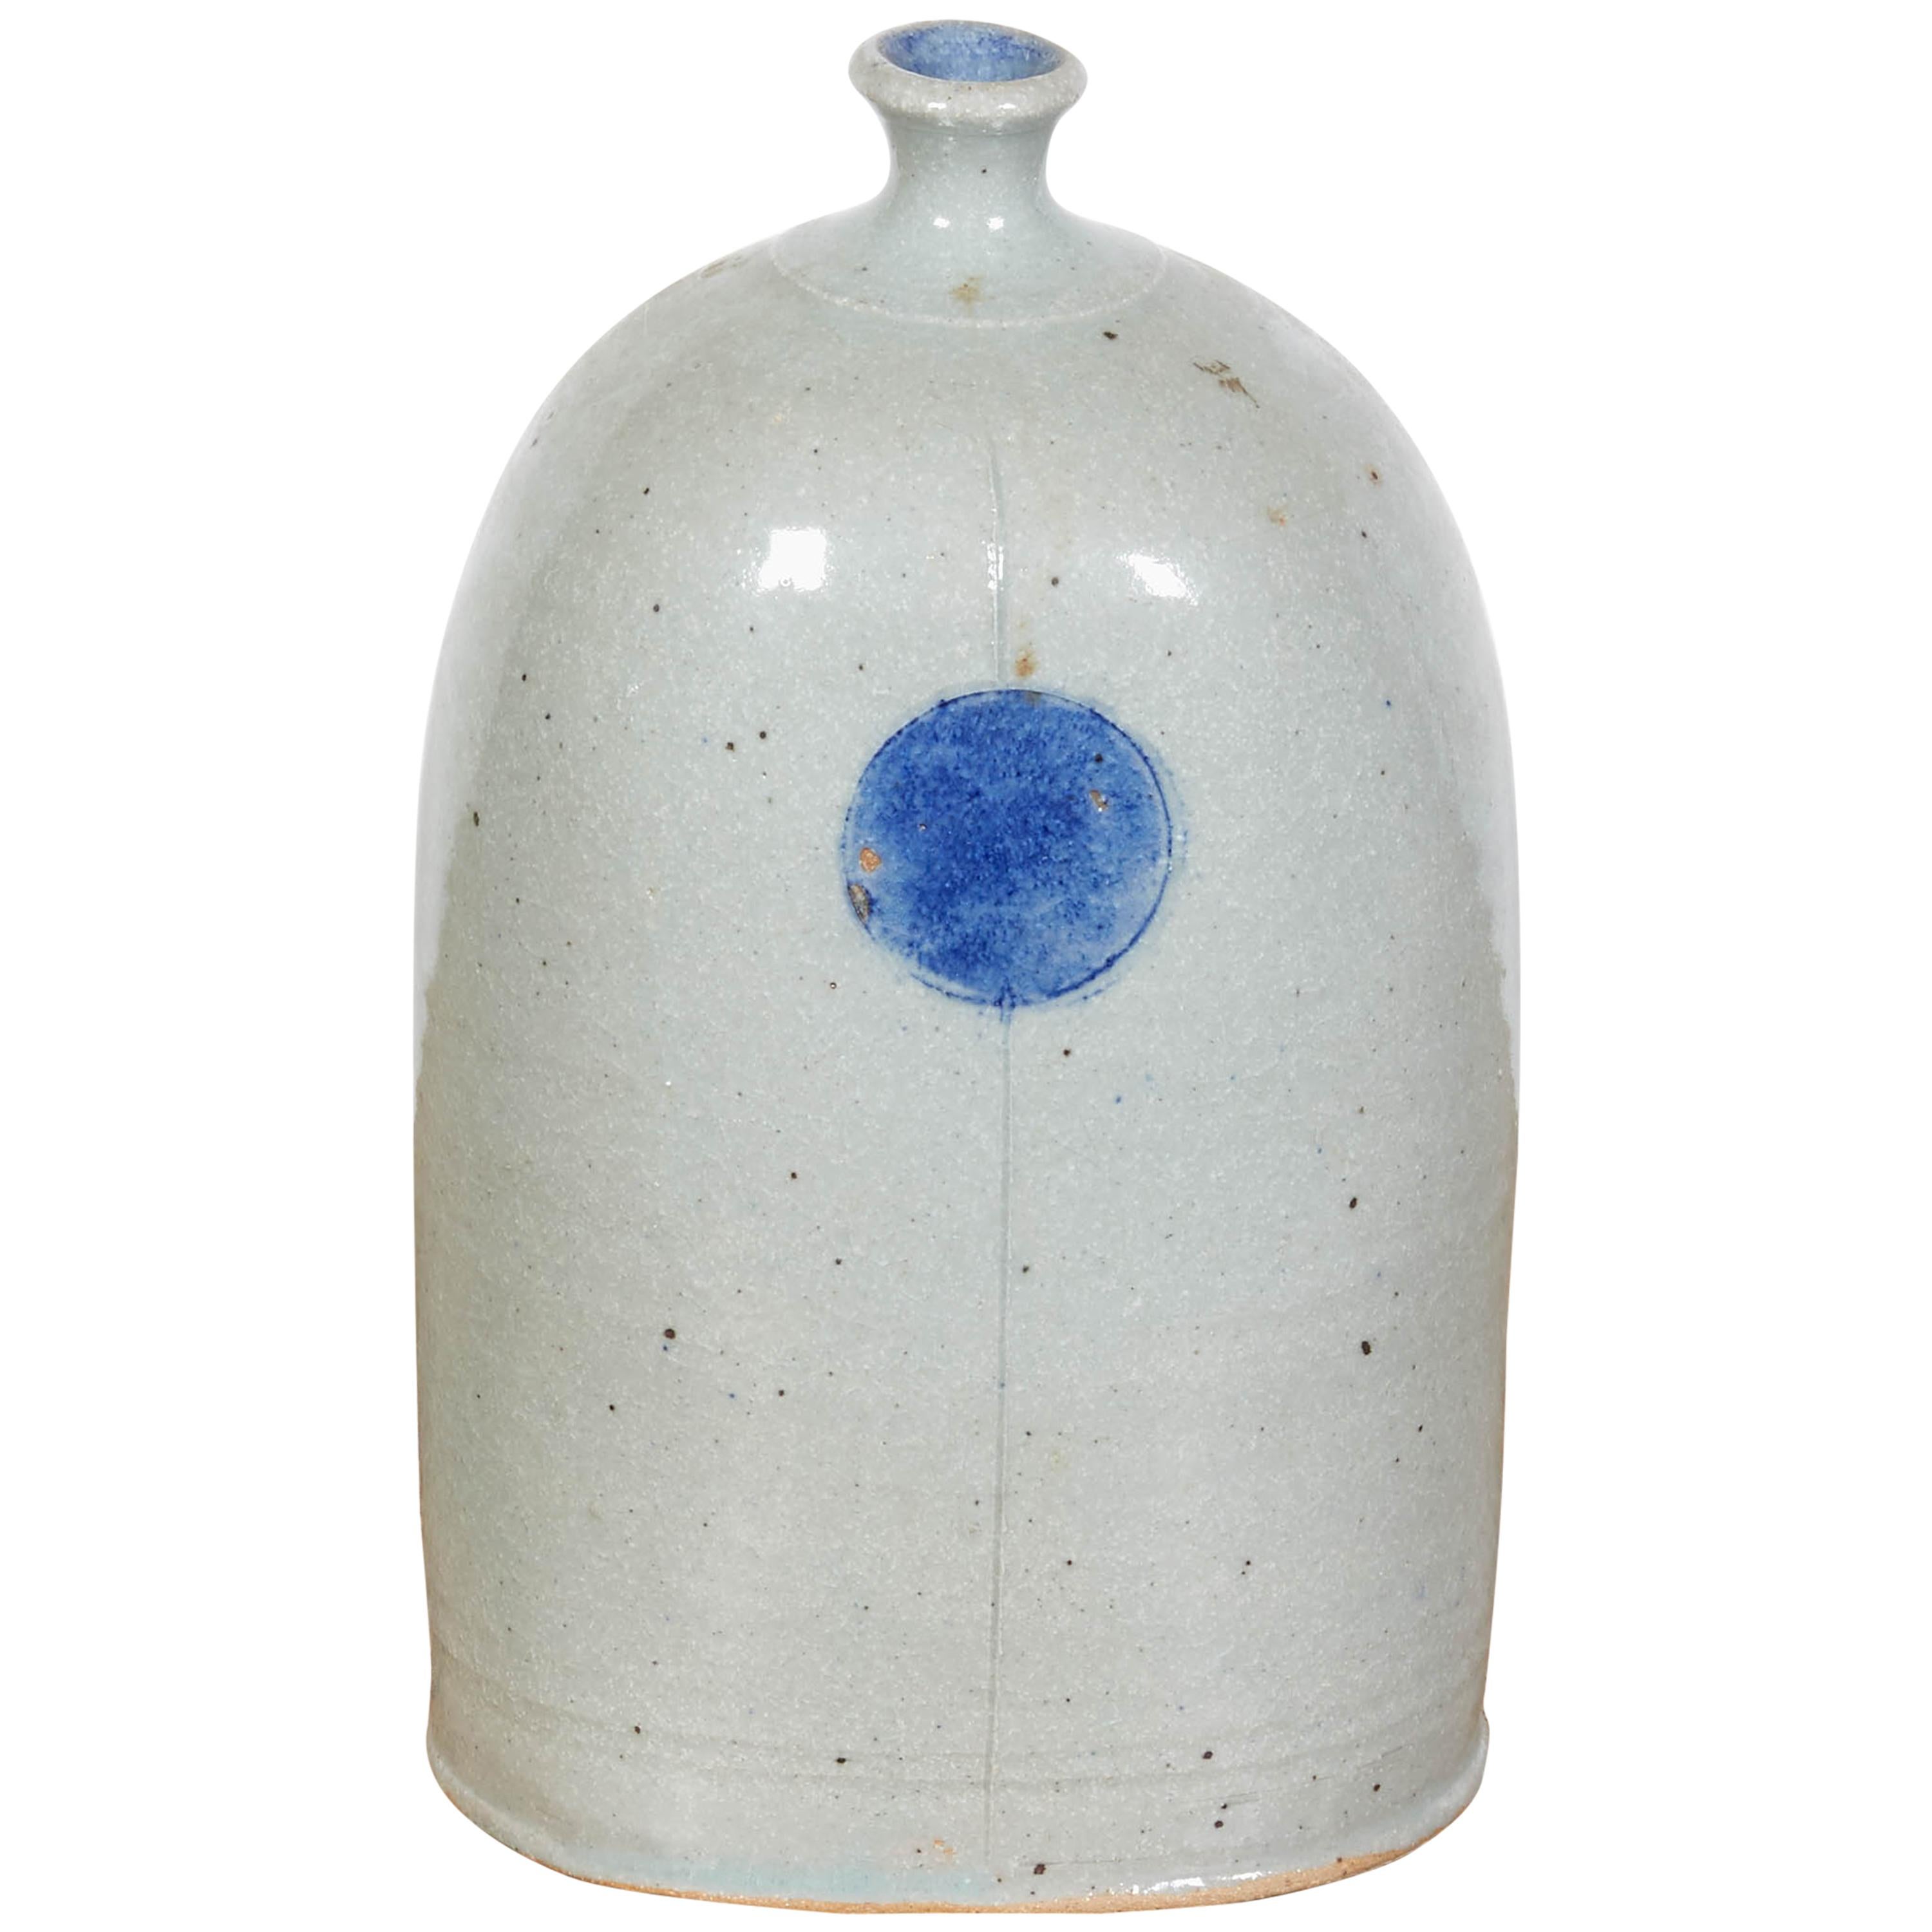 Striking Contemporary Handmade Ceramic Vase